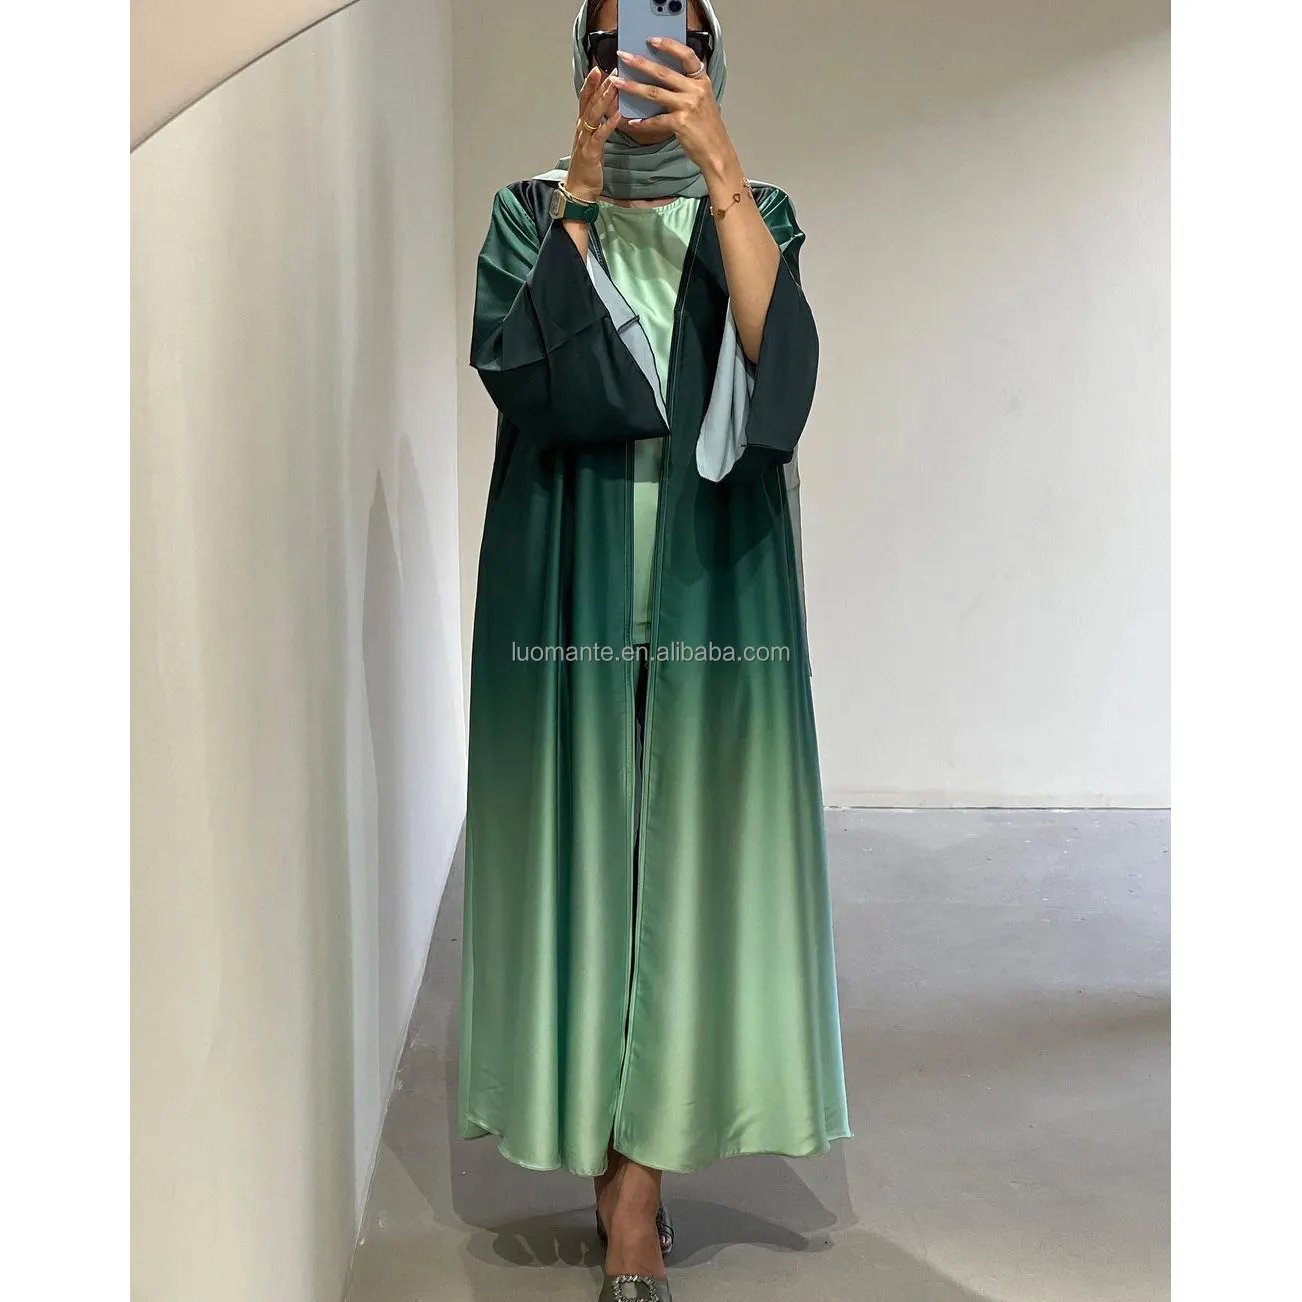 Fabricant d'abaya Ensemble d'abaya dégradé ombré en satin musulman personnalisé avec robe intérieure